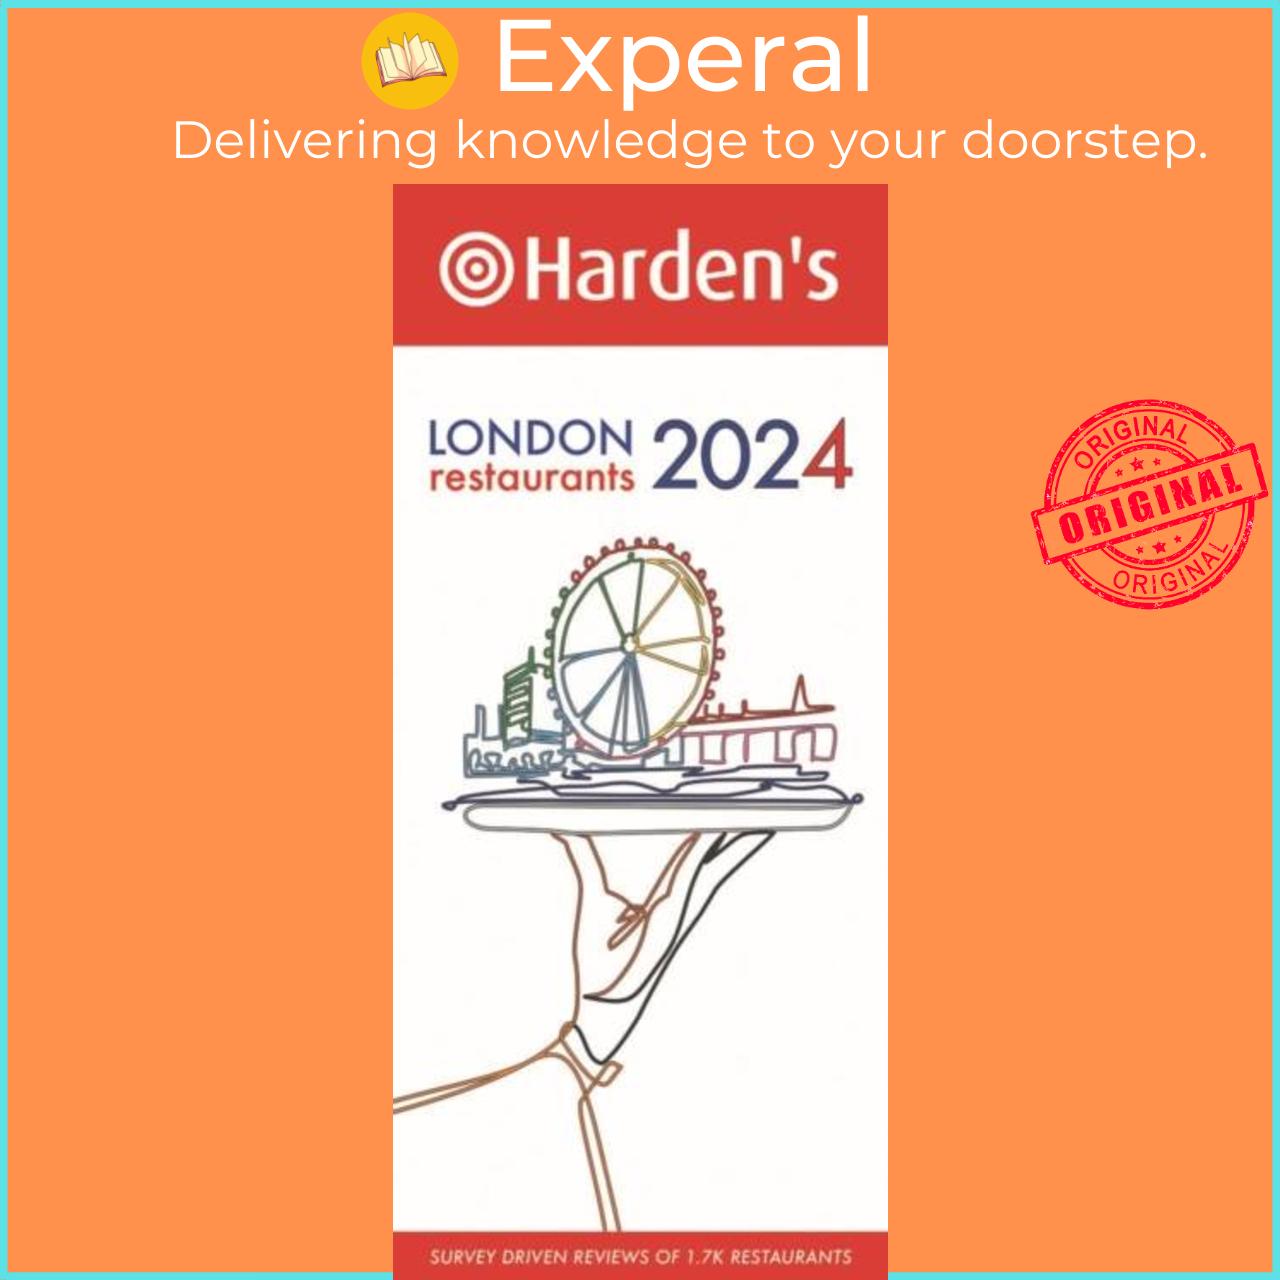 Sách - Harden's London Restaurants 2024 by Peter Harden (UK edition, paperback)